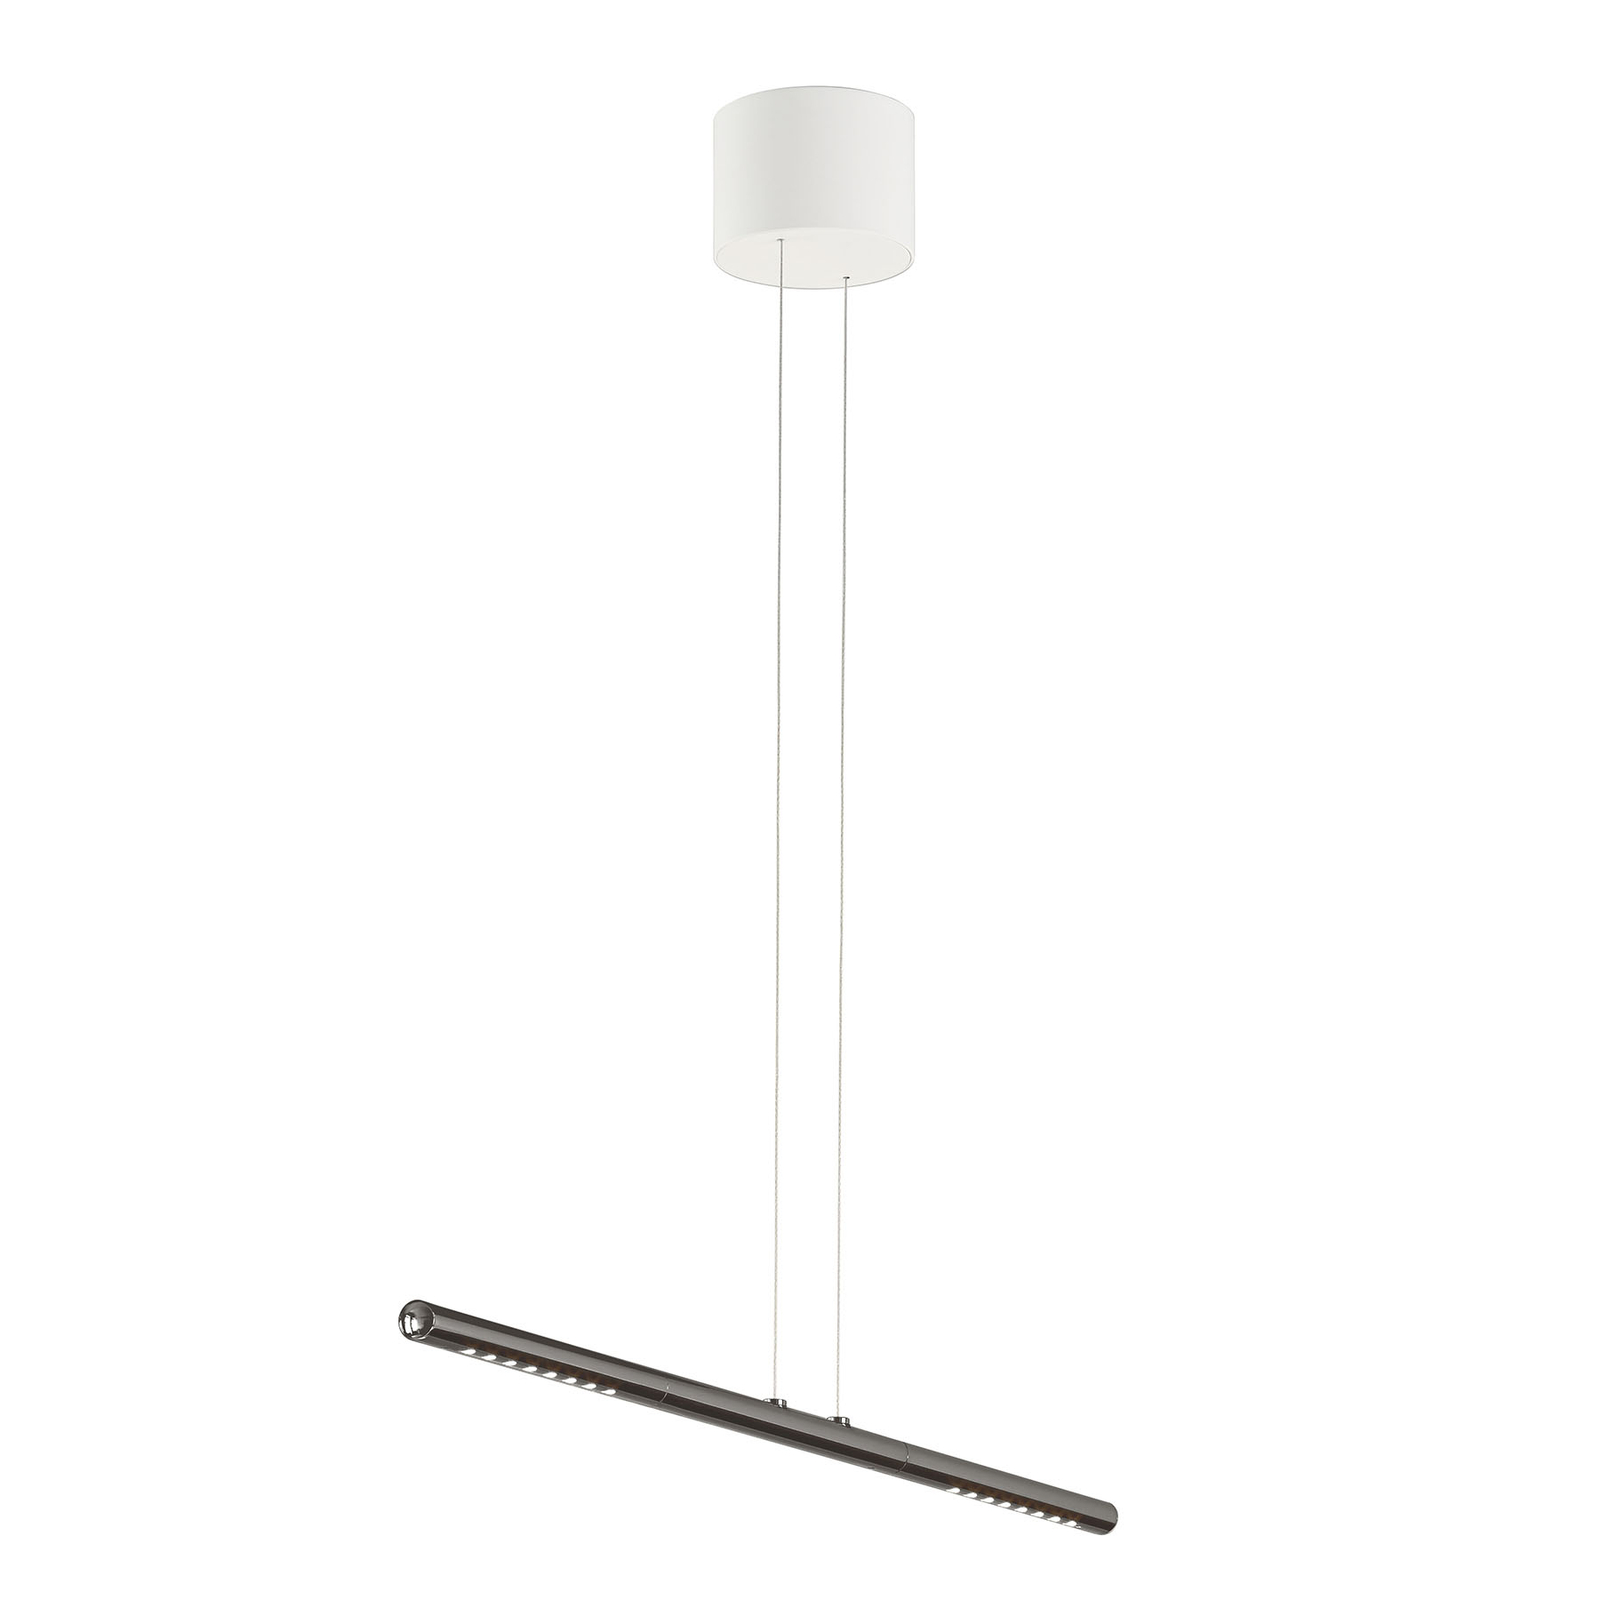 TECNOLUMEN LUM S hanglamp, 85 cm, gerookt chroom